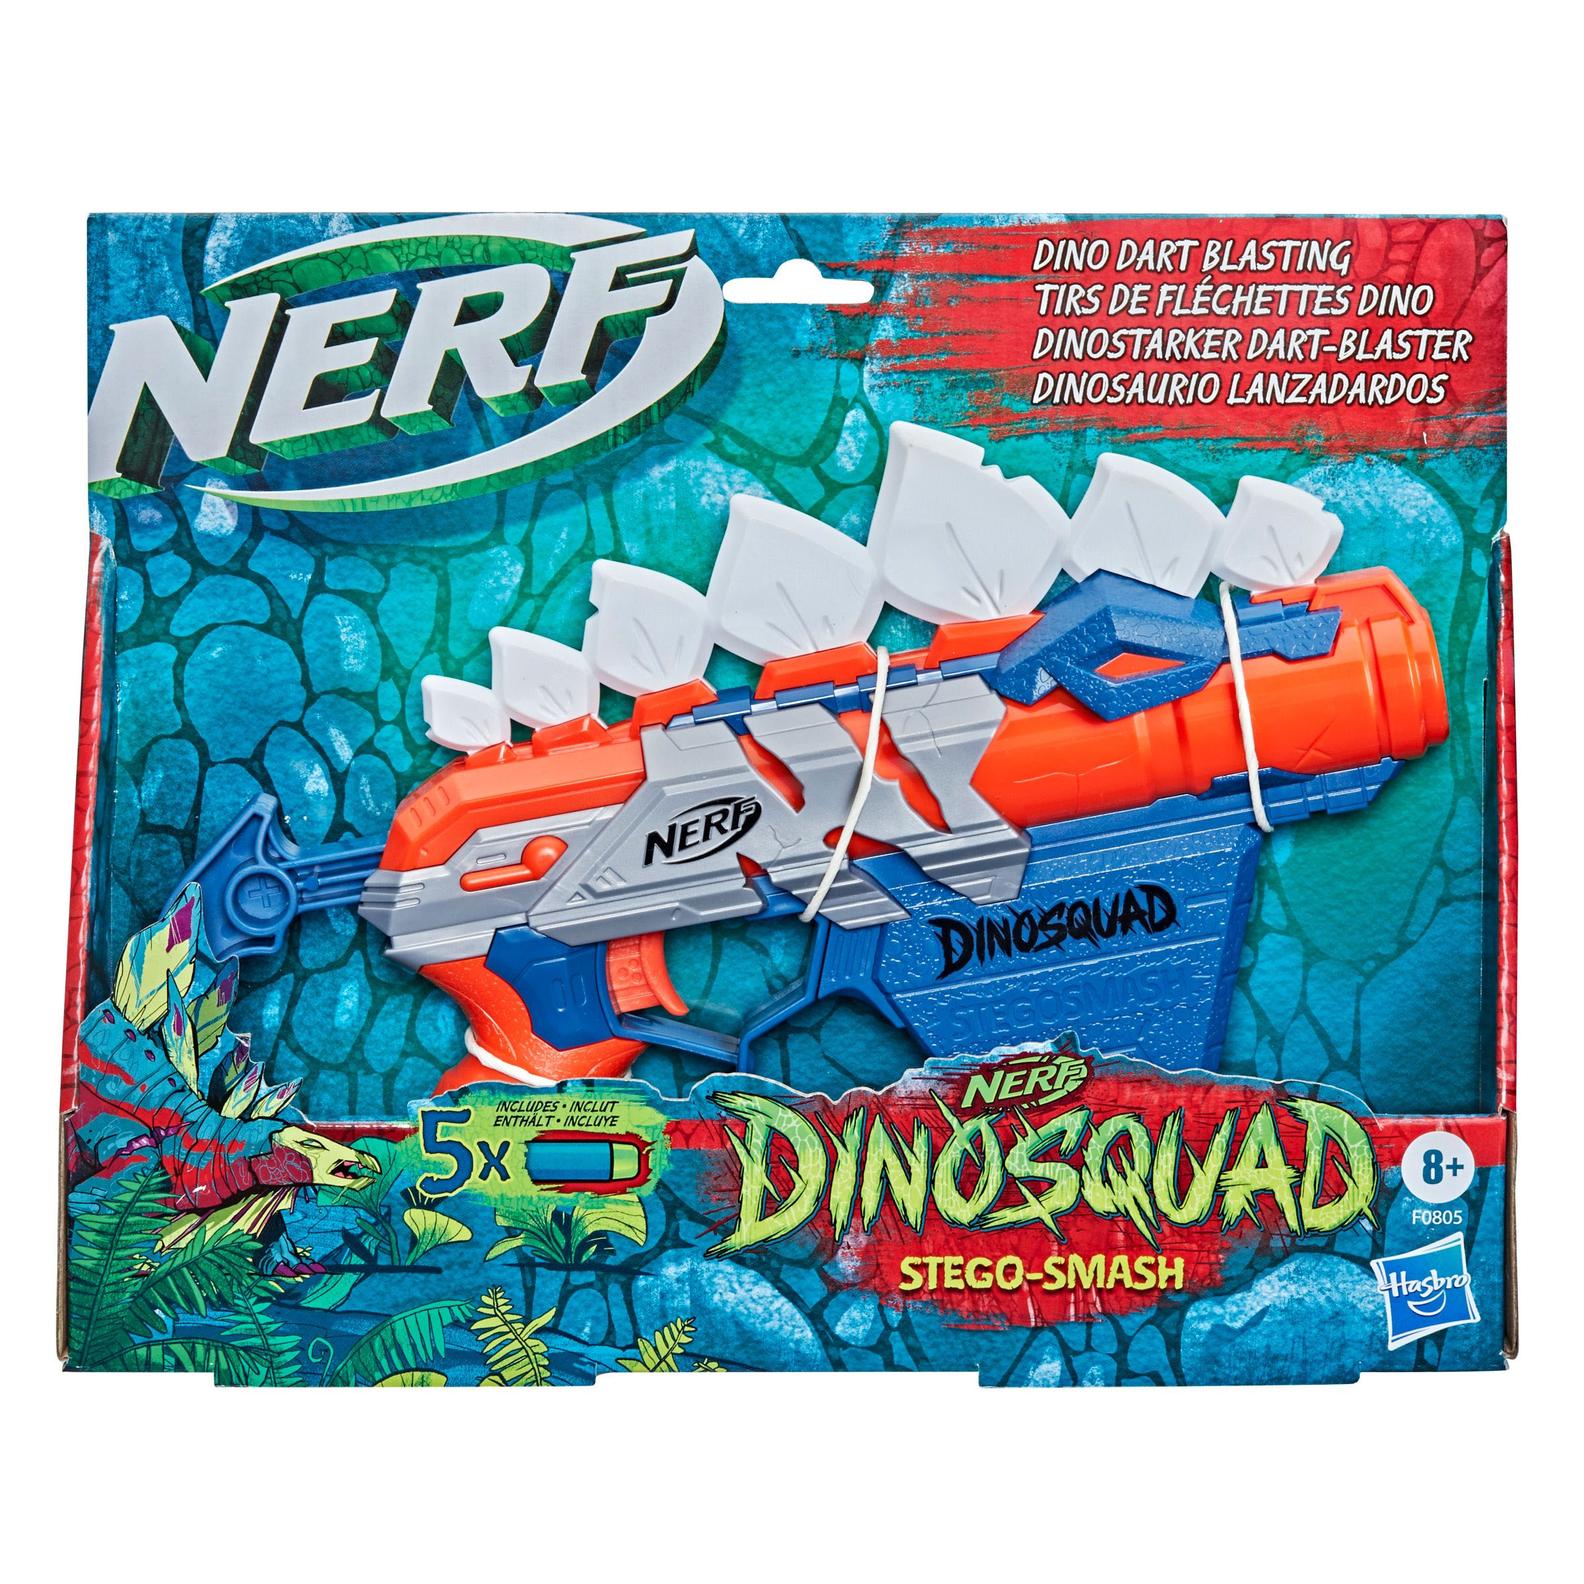 Oferta de Nerf dinosquad... por 9,95€ en Jugueterías Nikki